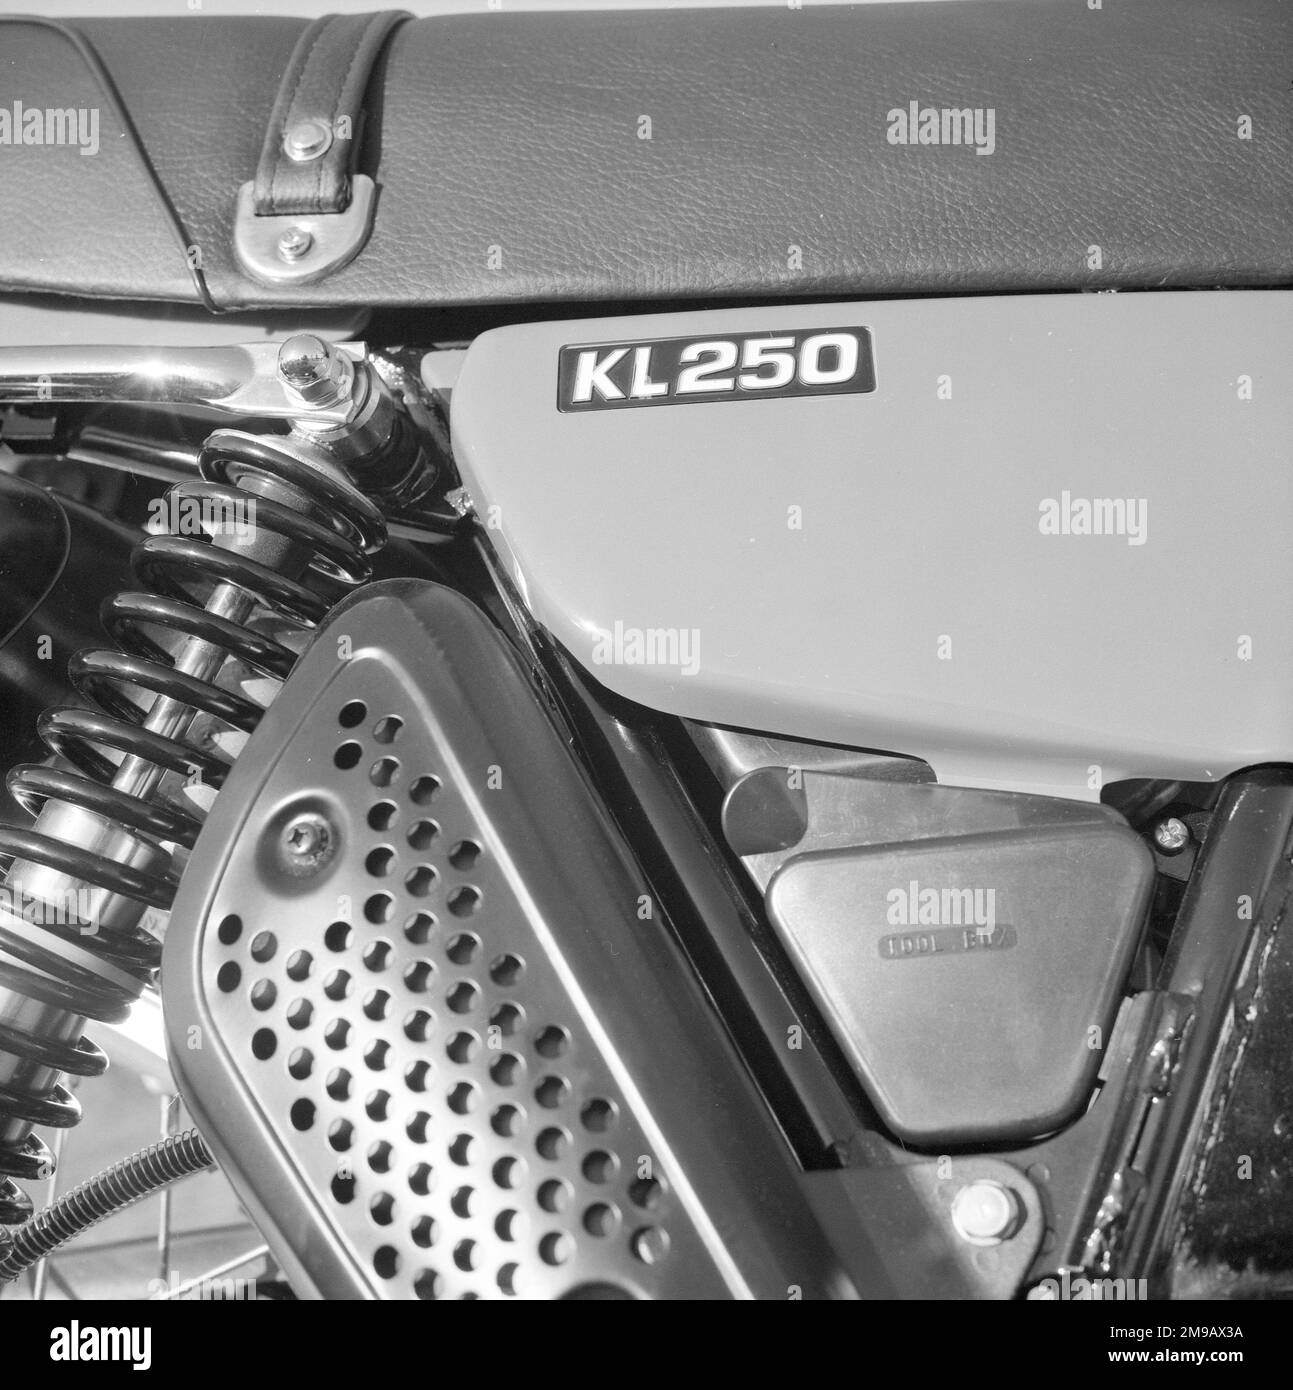 Moto Kawasaki KL 250. Foto Stock